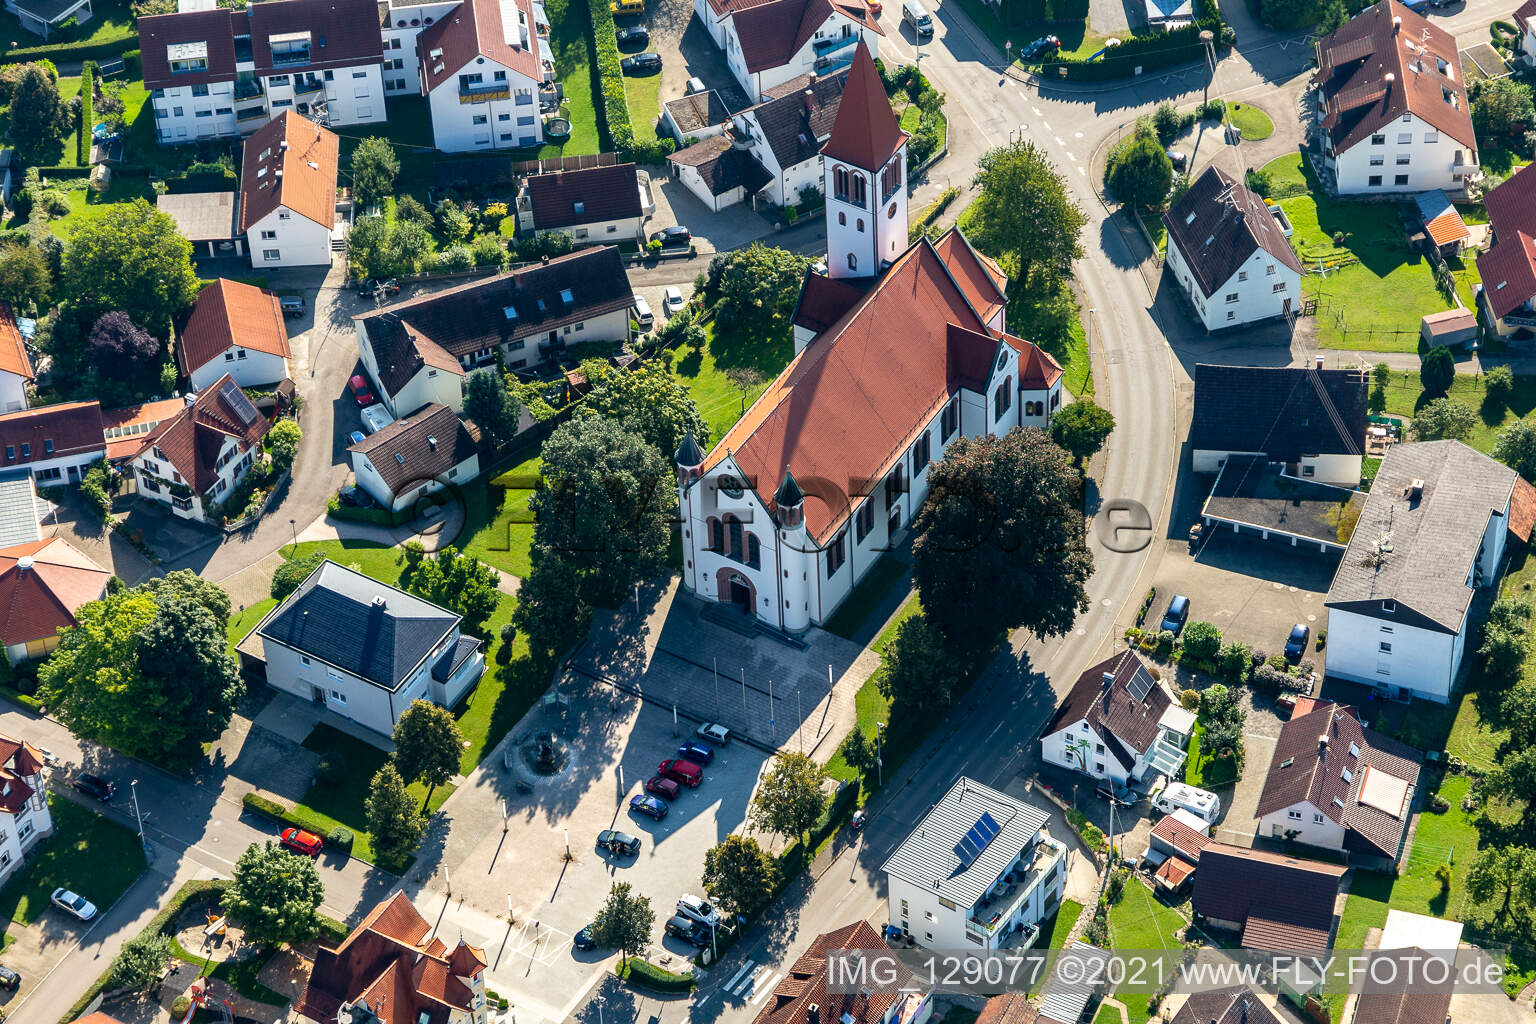 Aerial view of Mochenwangen parish church in Wolpertswende in the state Baden-Wuerttemberg, Germany